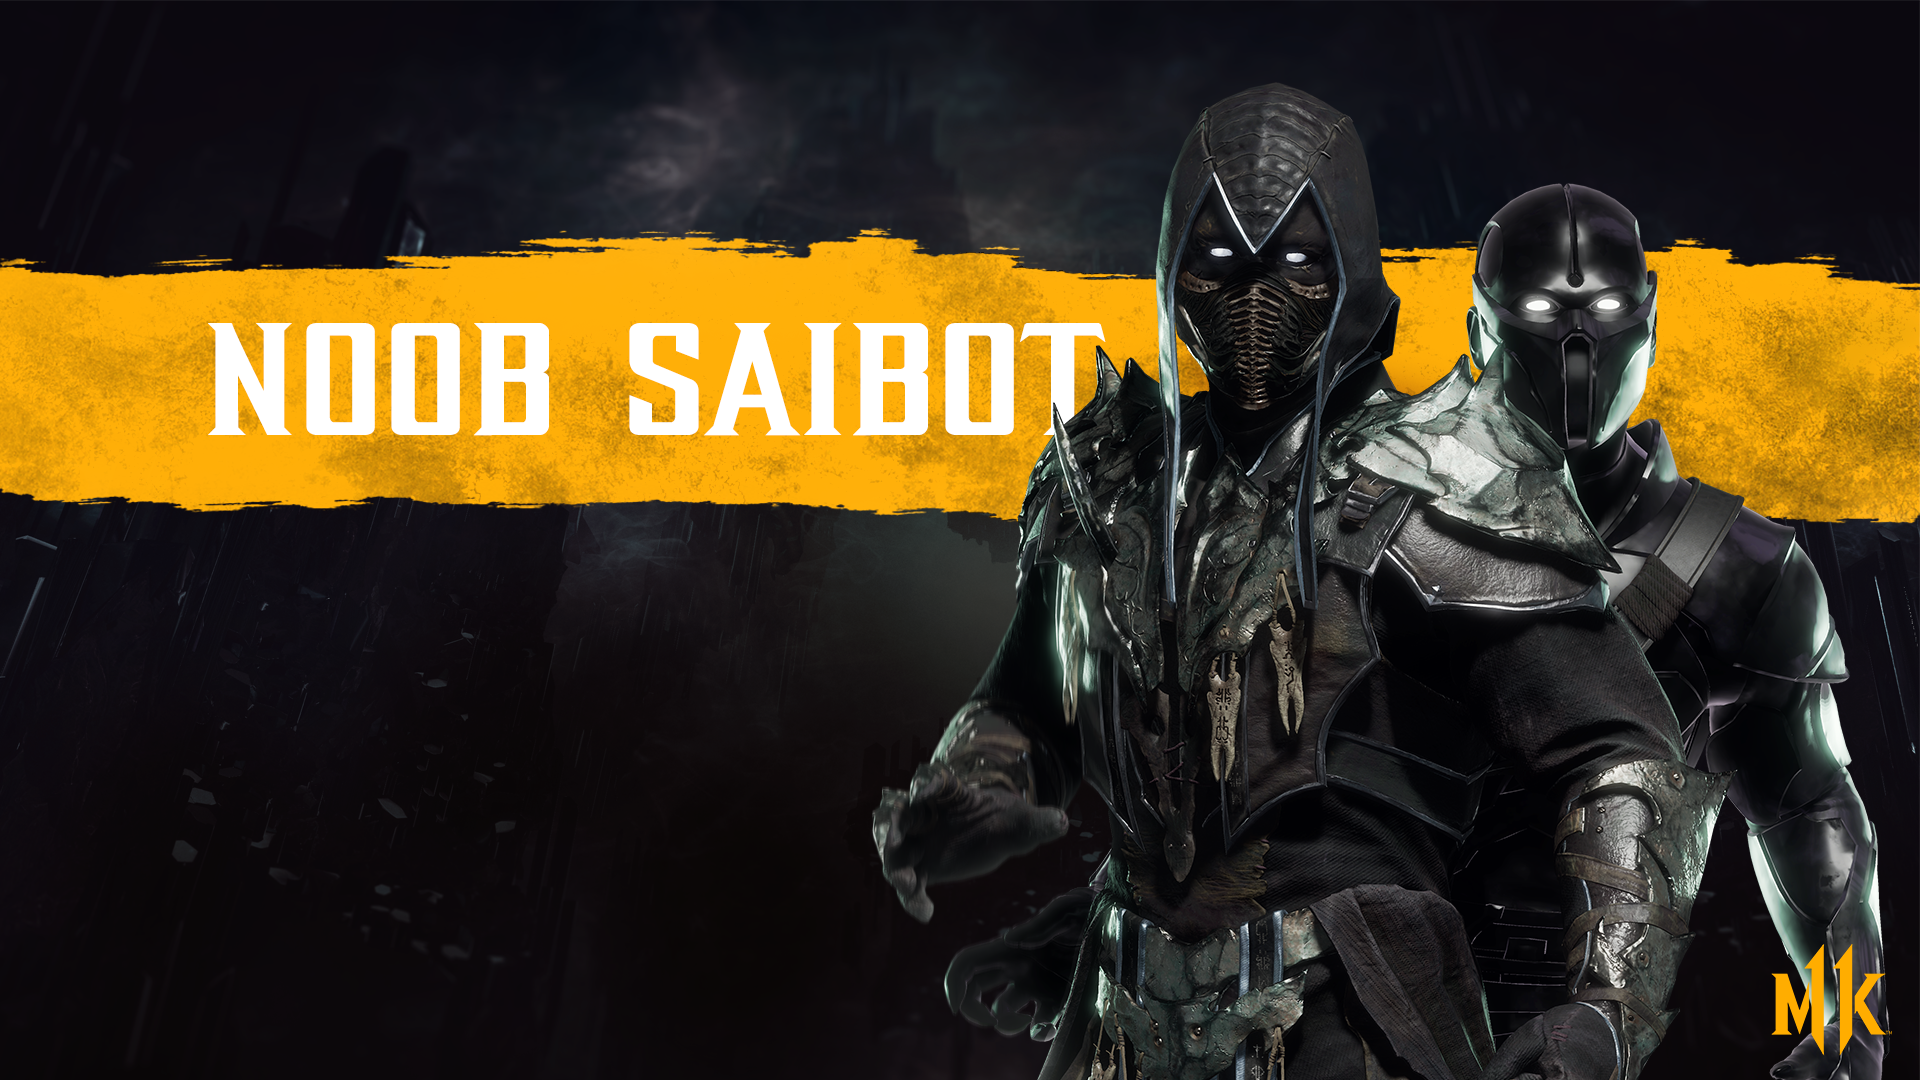 Noob Saibot Mortal Kombat 11 Character Render Mortal Kombat Online